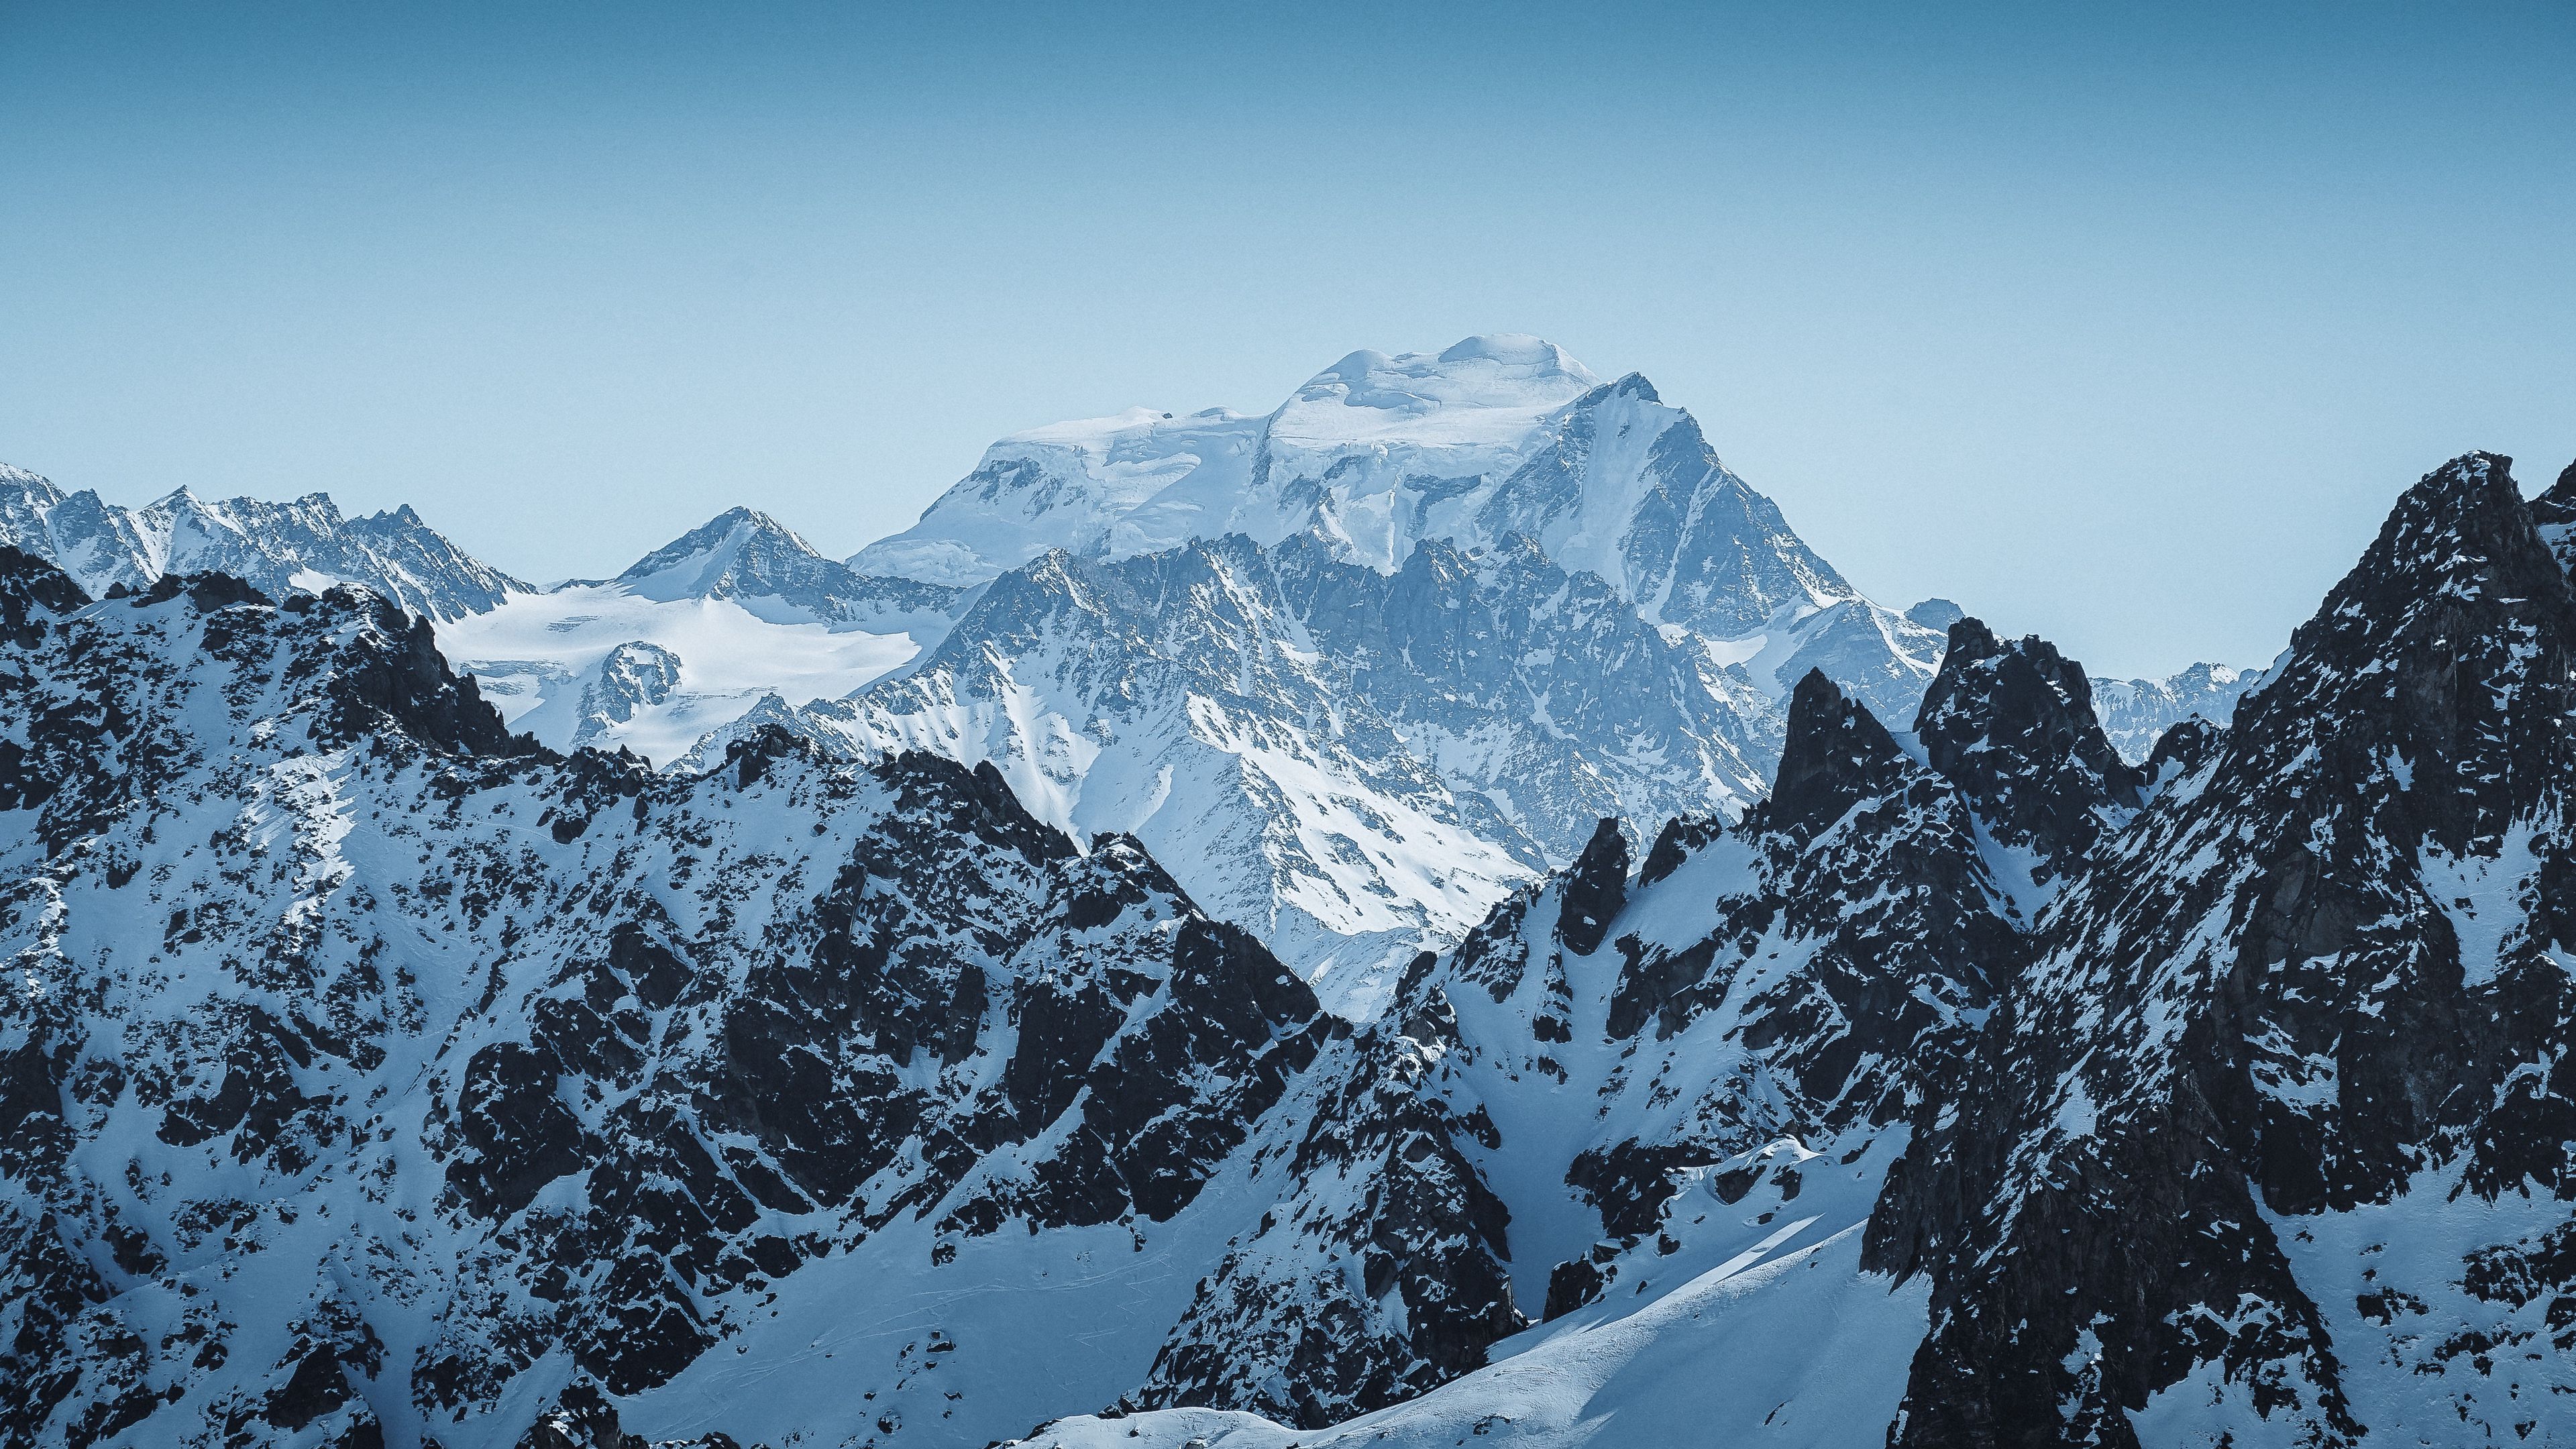 Download wallpaper 3840x2160 mountains, peak, alps, snowy, mountain range 4k uhd 16:9 HD background